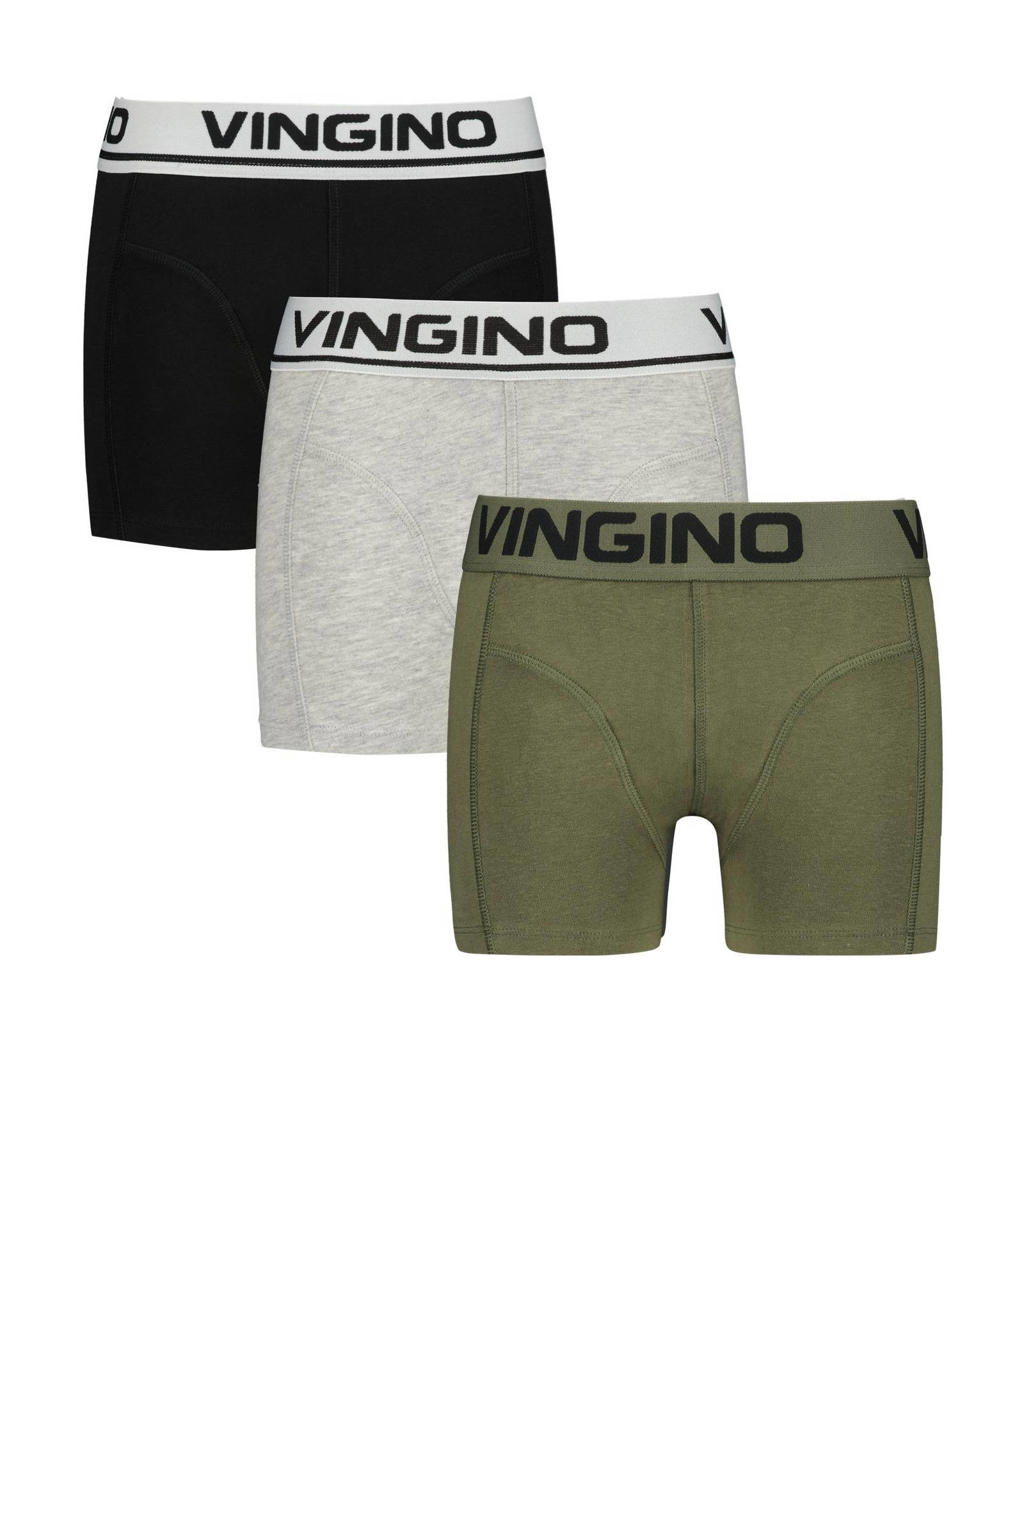 Vingino   boxershort - set van 3 grijs melange/army/zwart